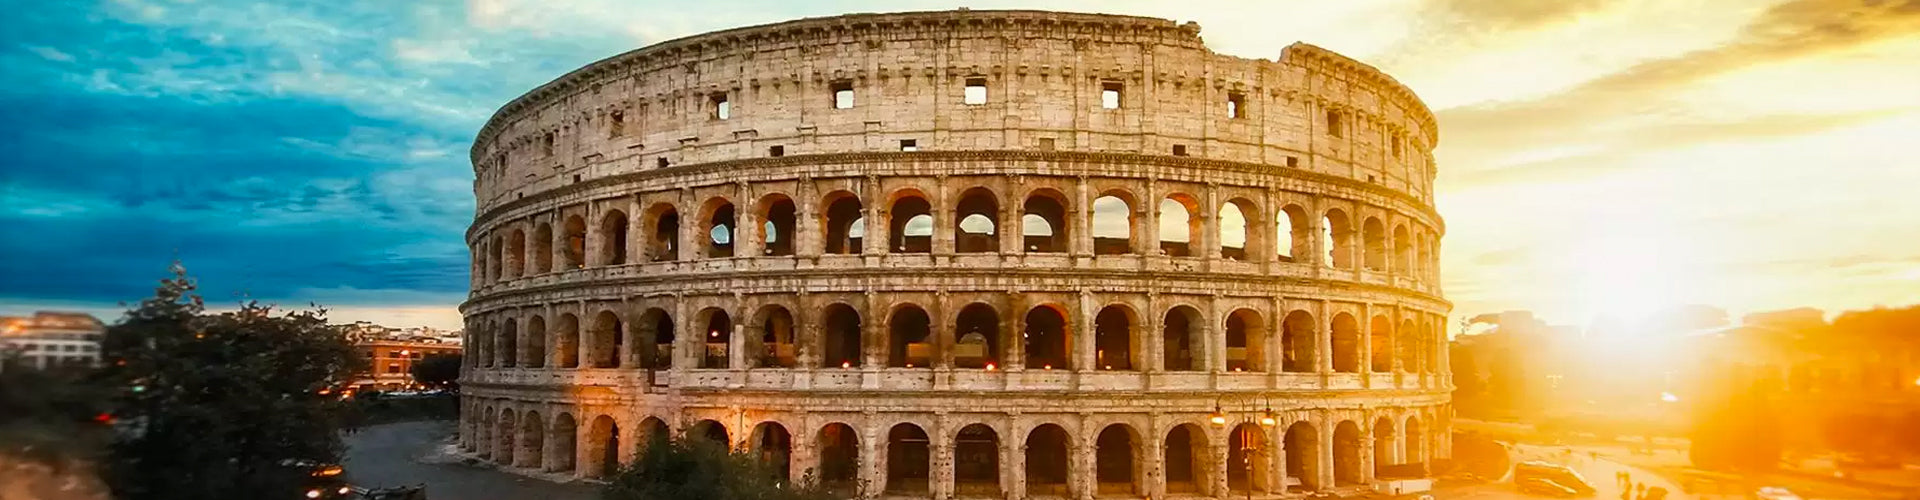 The Coliseum in Rome 